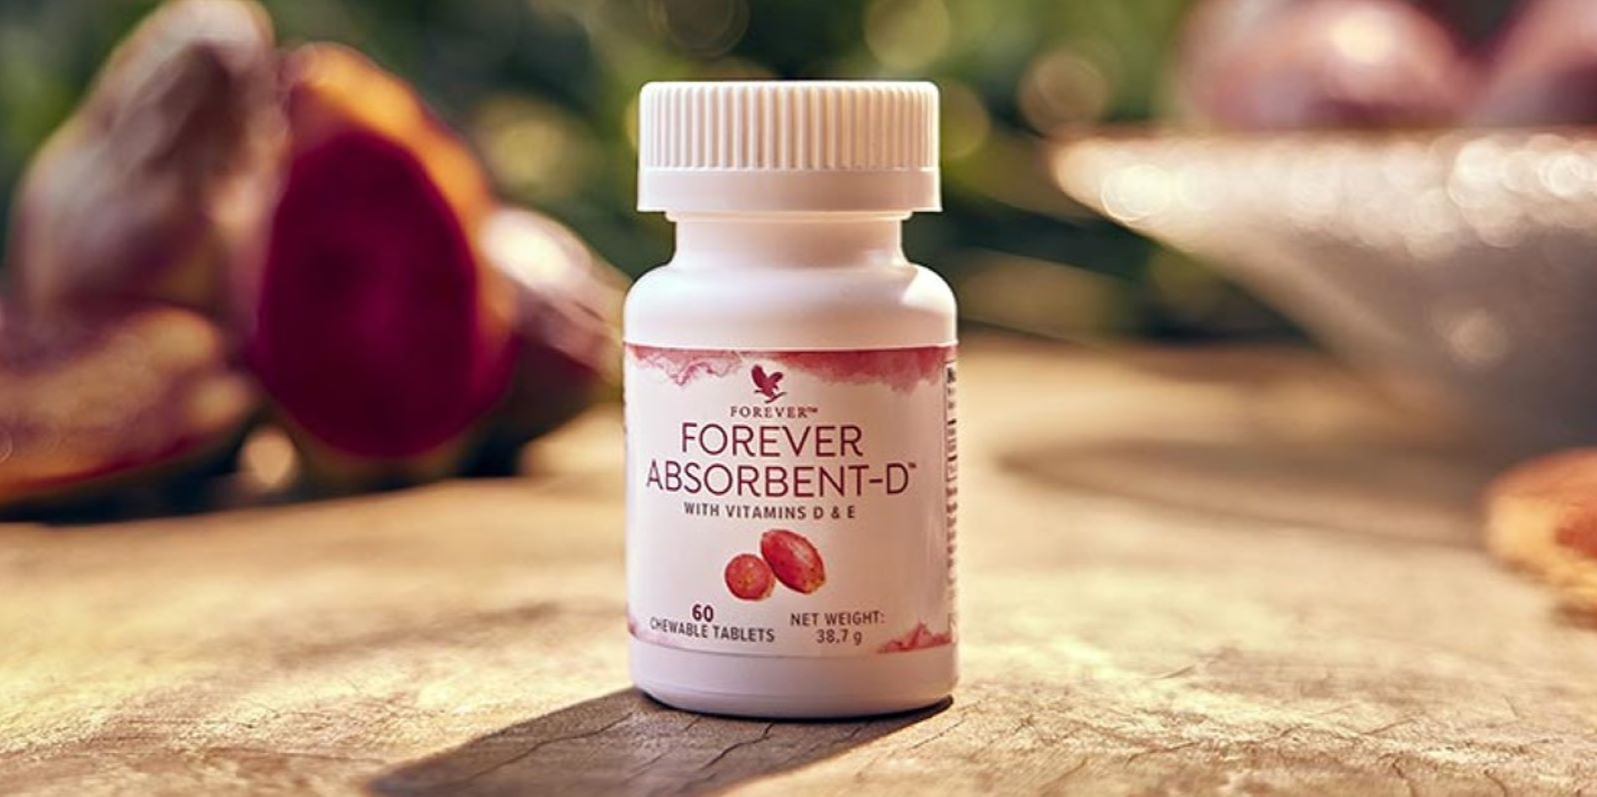 Forever absorbent-D™: a vitamina do sol num delicioso comprimido